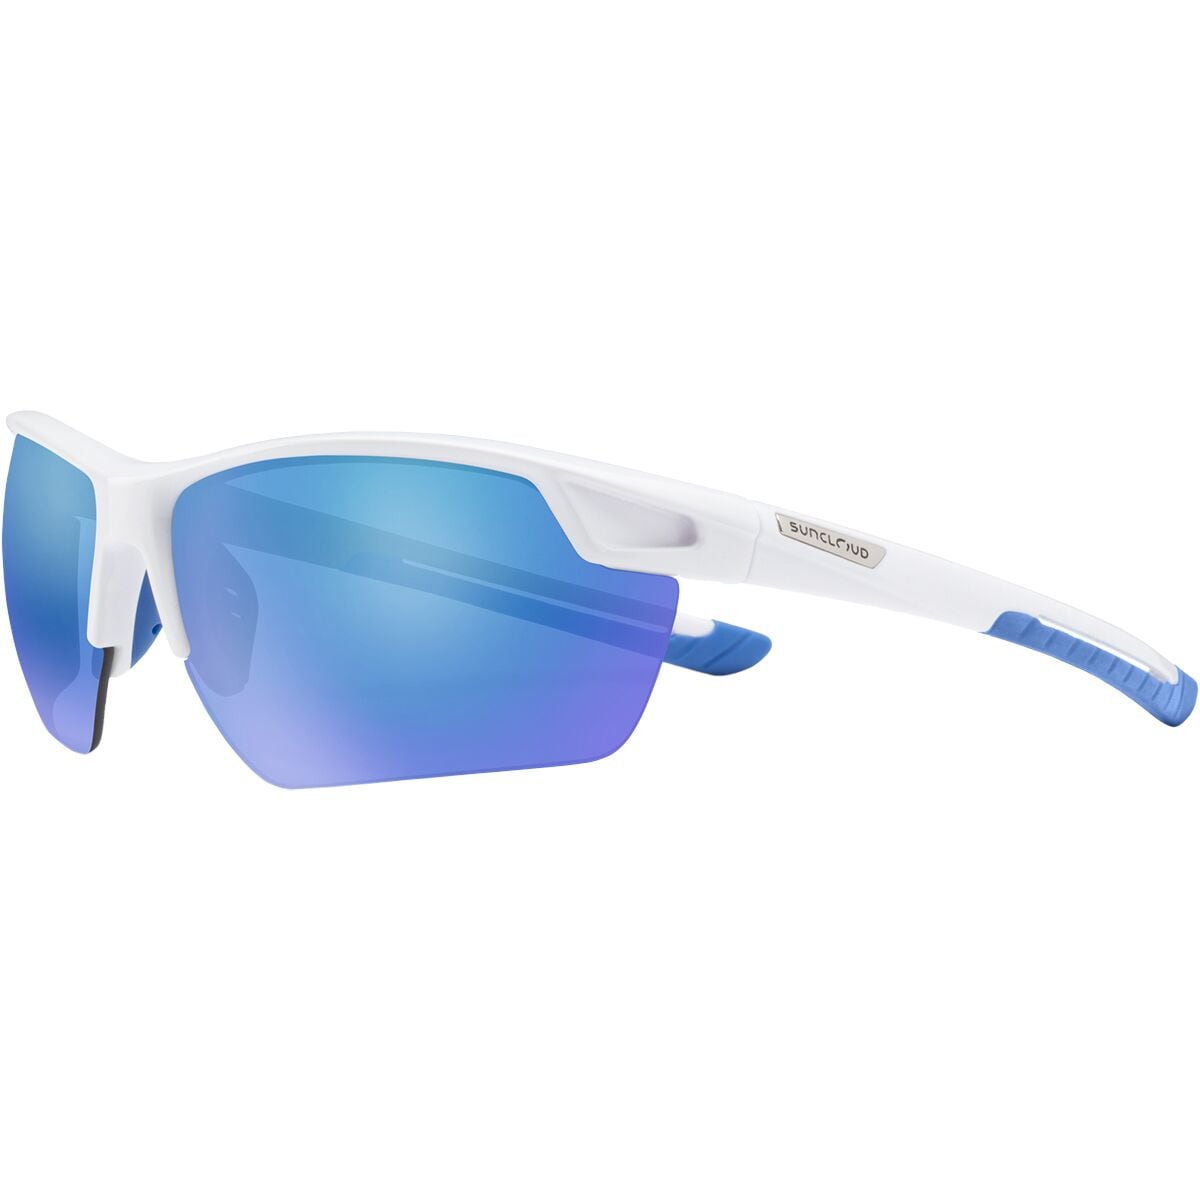 Поляризованные солнцезащитные очки contender Suncloud Polarized Optics, цвет white/polar blue2 mirror очки солнцезащитные stylemark polarized l1454a